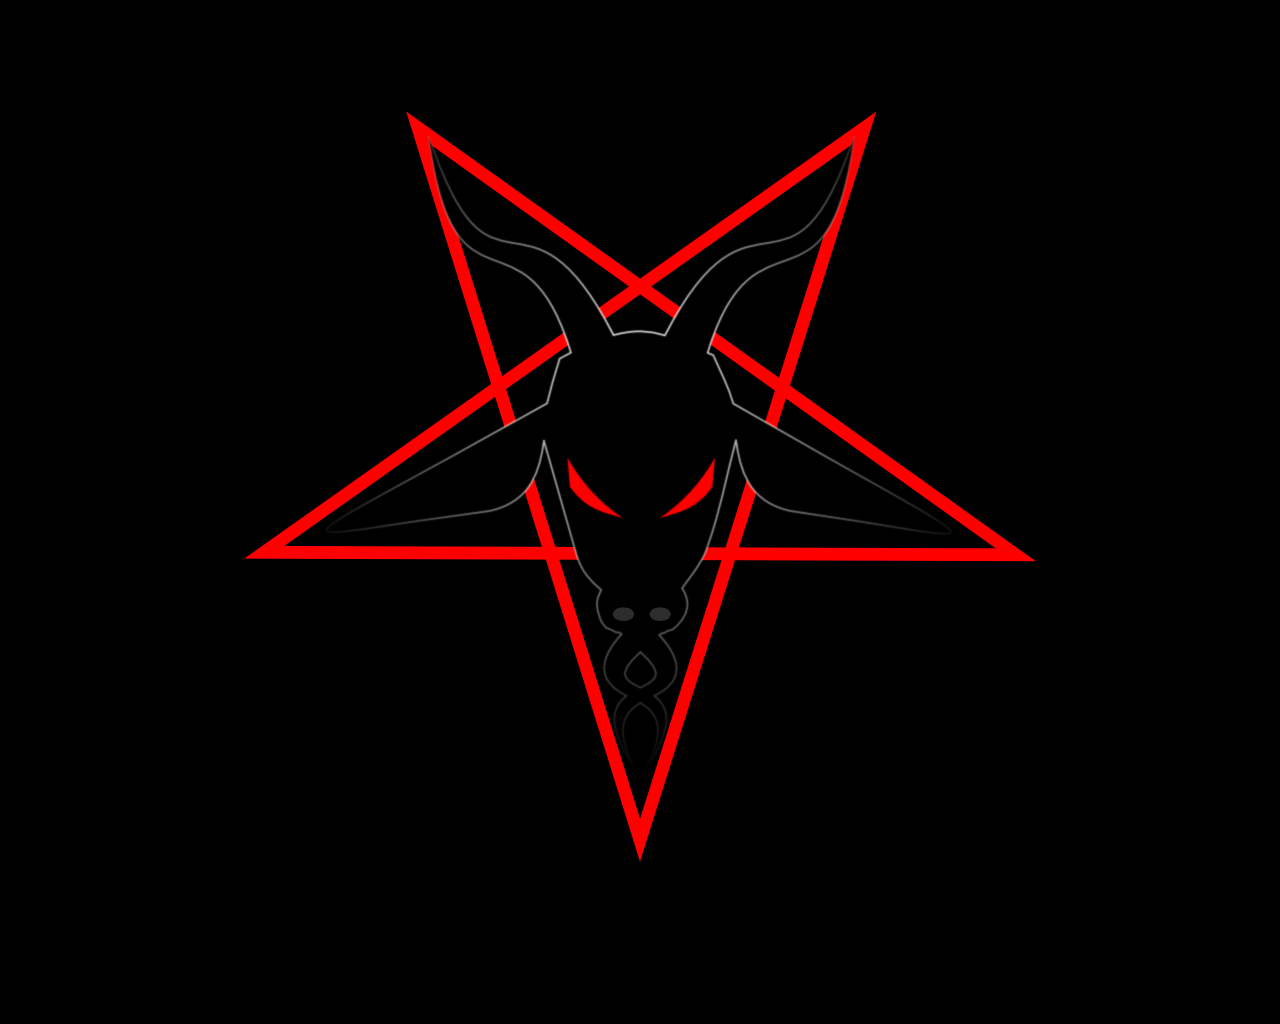 Satanic wallpapers on Pinterest | Satanic Art, Black Magic and ...